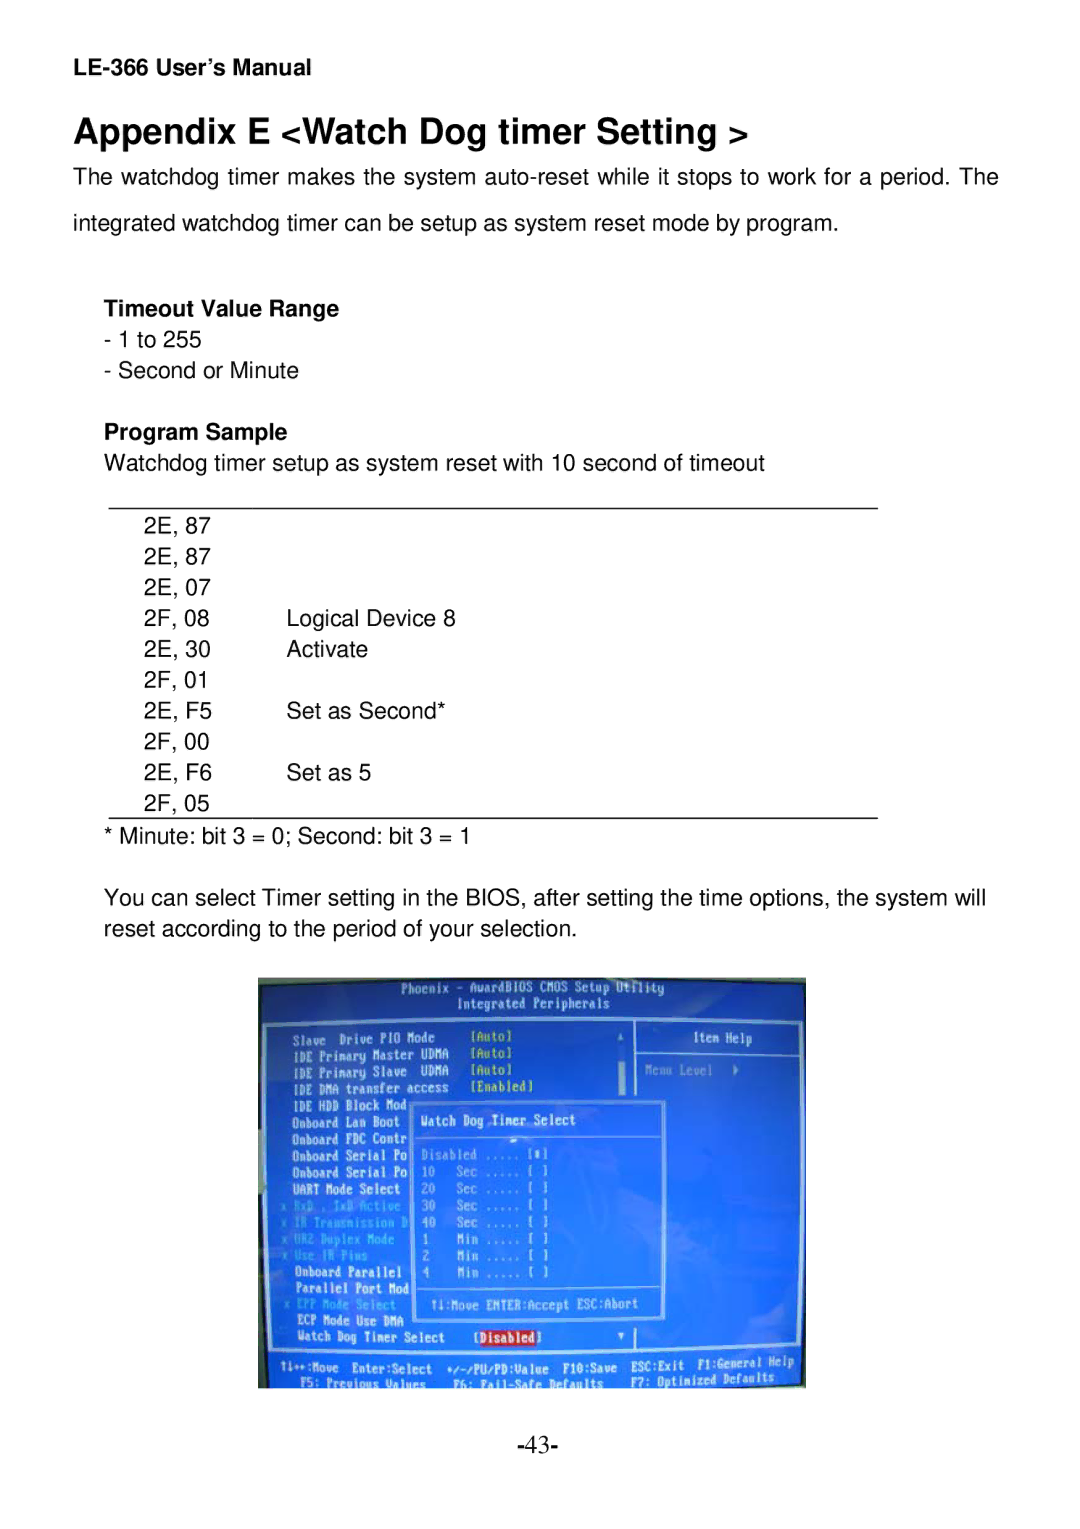 AMD LE-366 user manual Appendix E Watch Dog timer Setting, Program Sample 